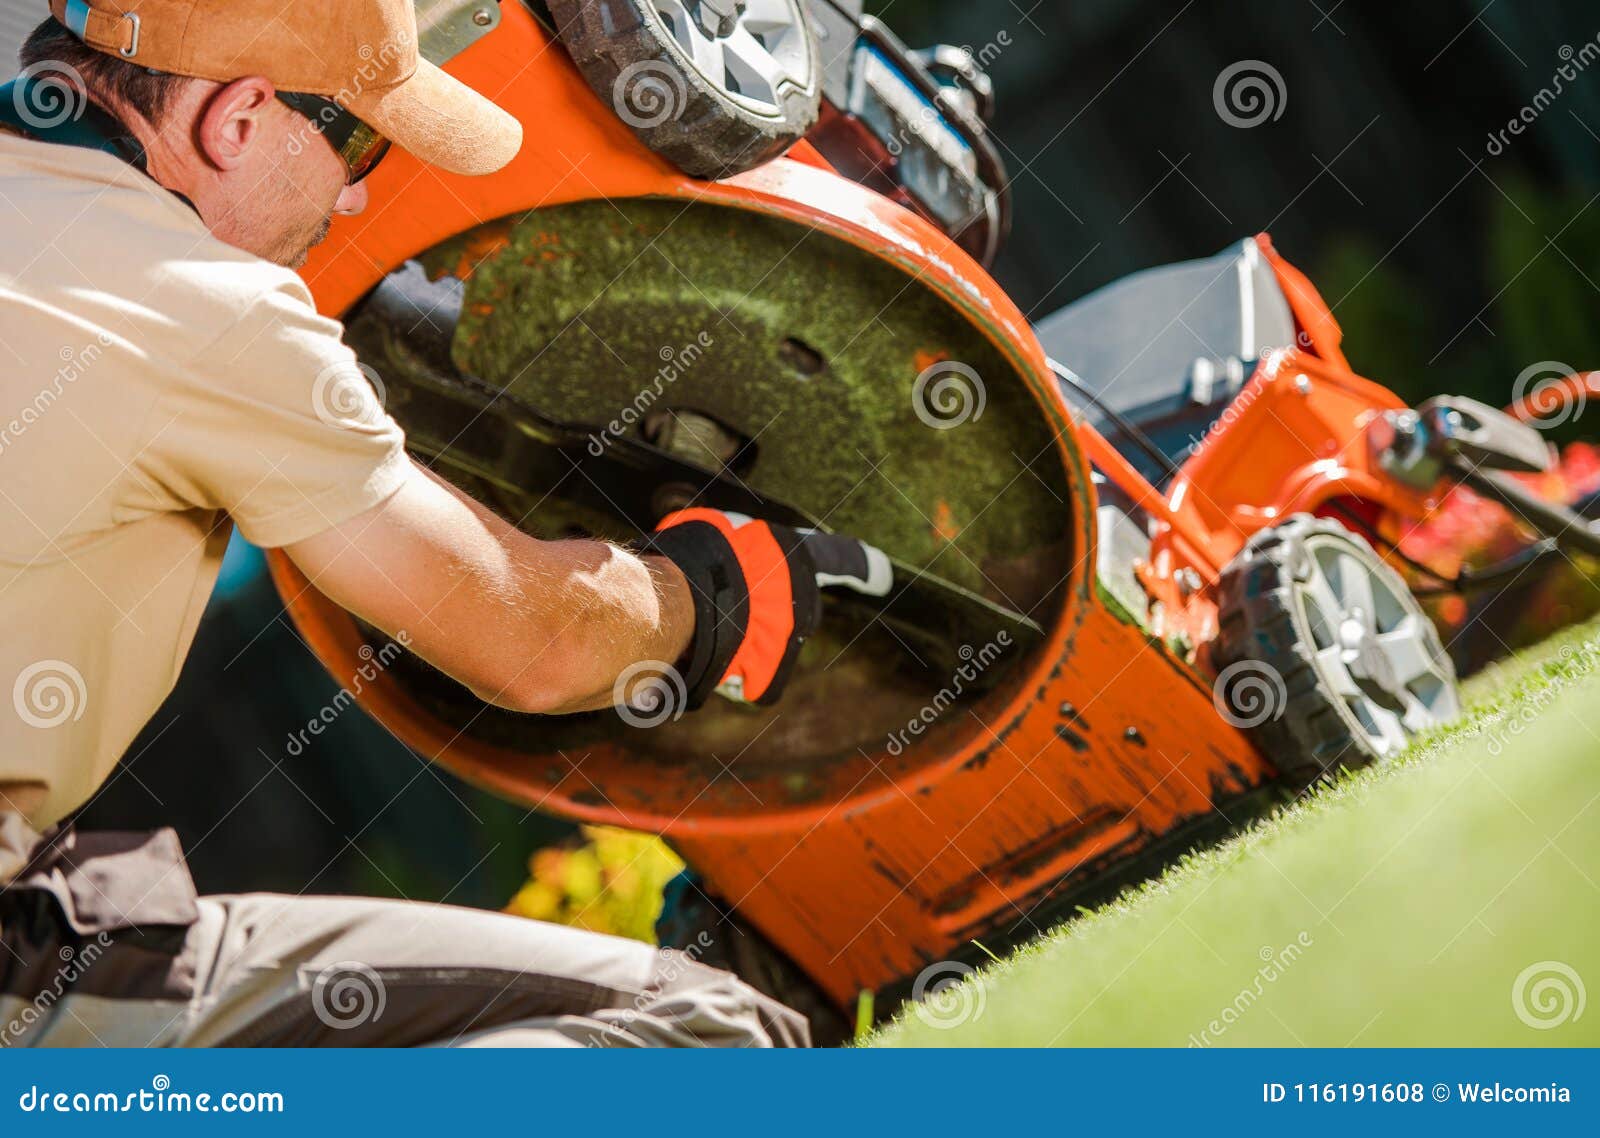 checking lawn mower blades